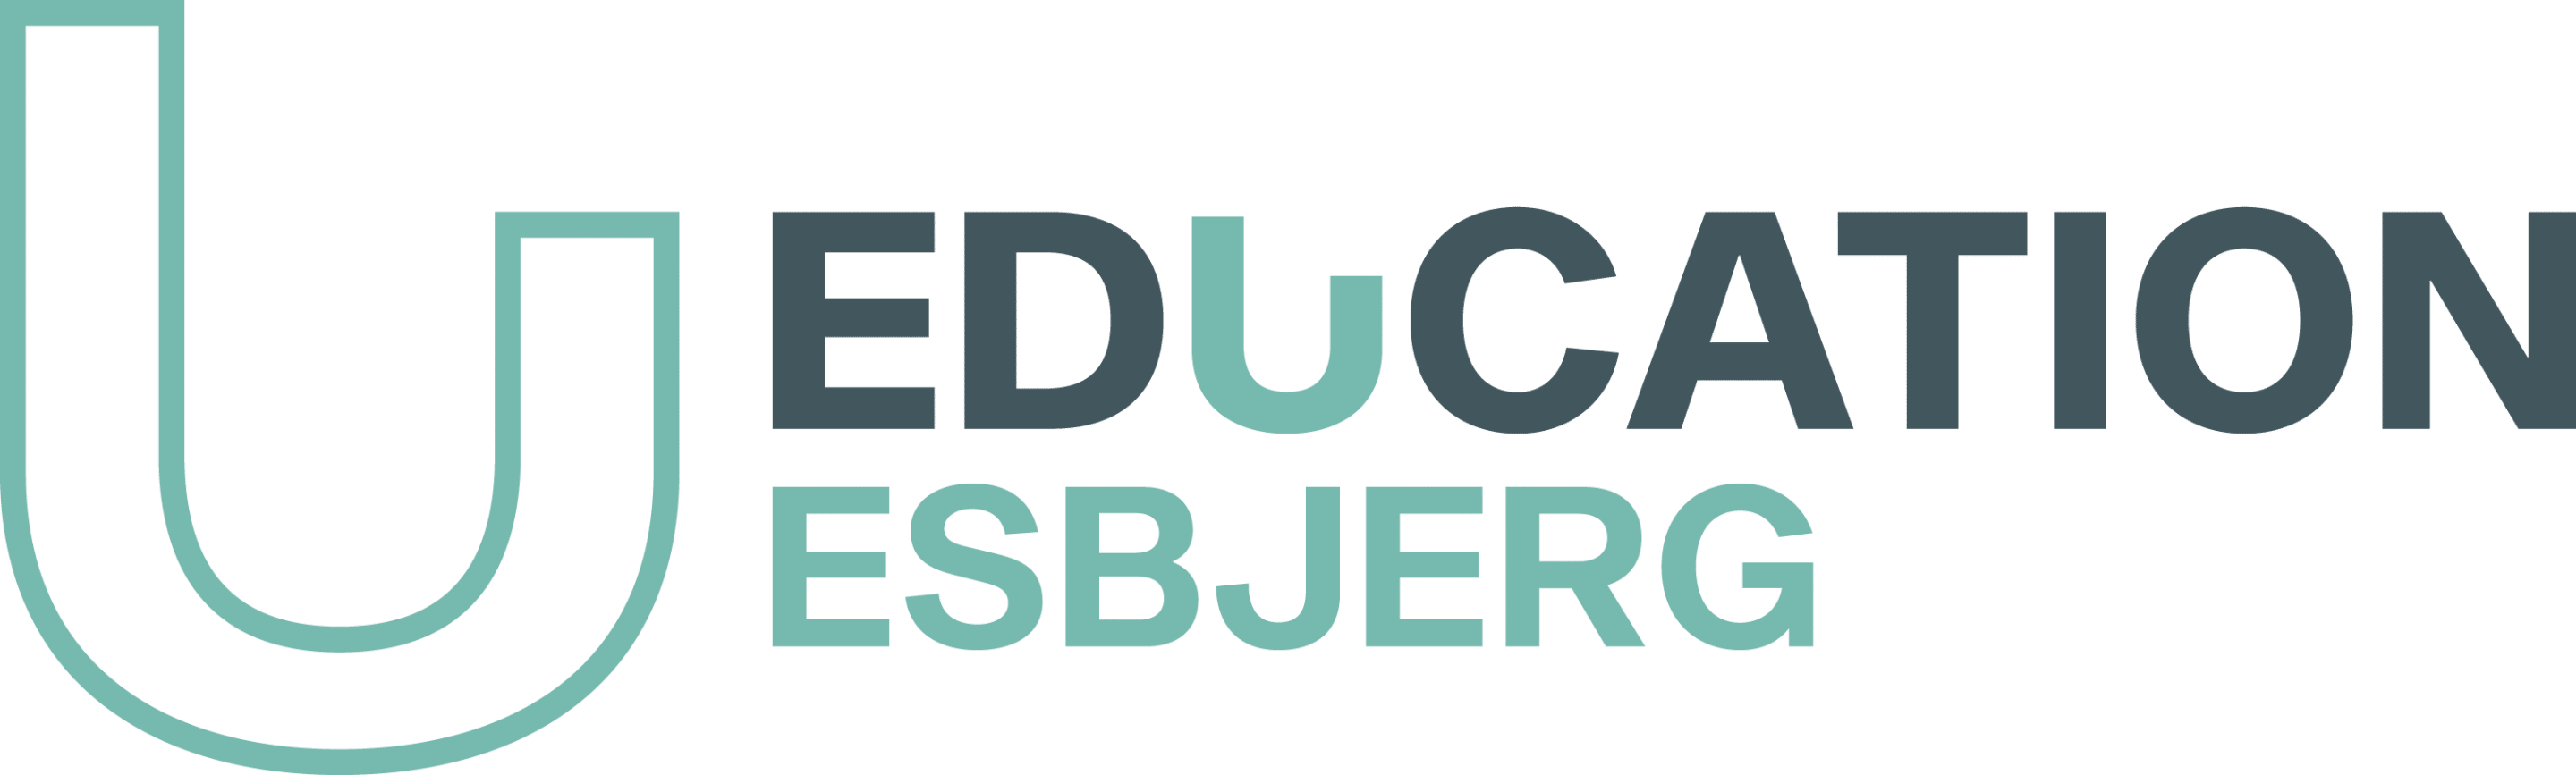 Education Esbjerg logo